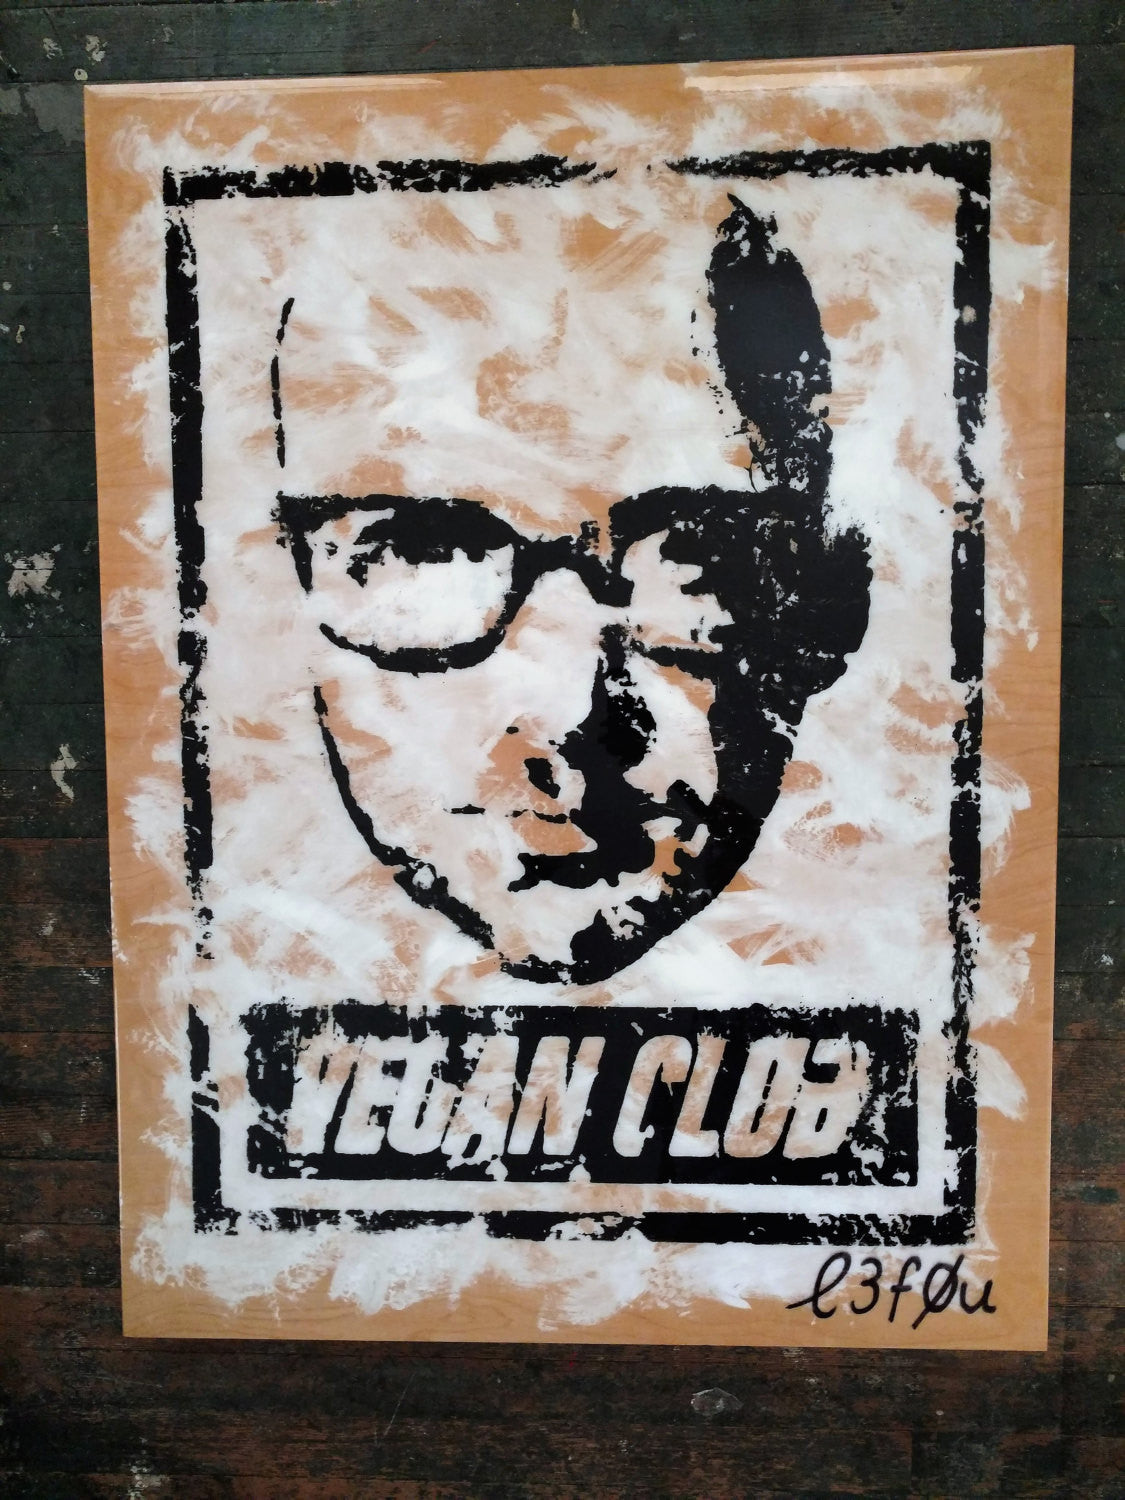 30x40 Original Artwork "Vegan Club" featuring your fav vegan celeb Moby signed L3F0u (1 of X)